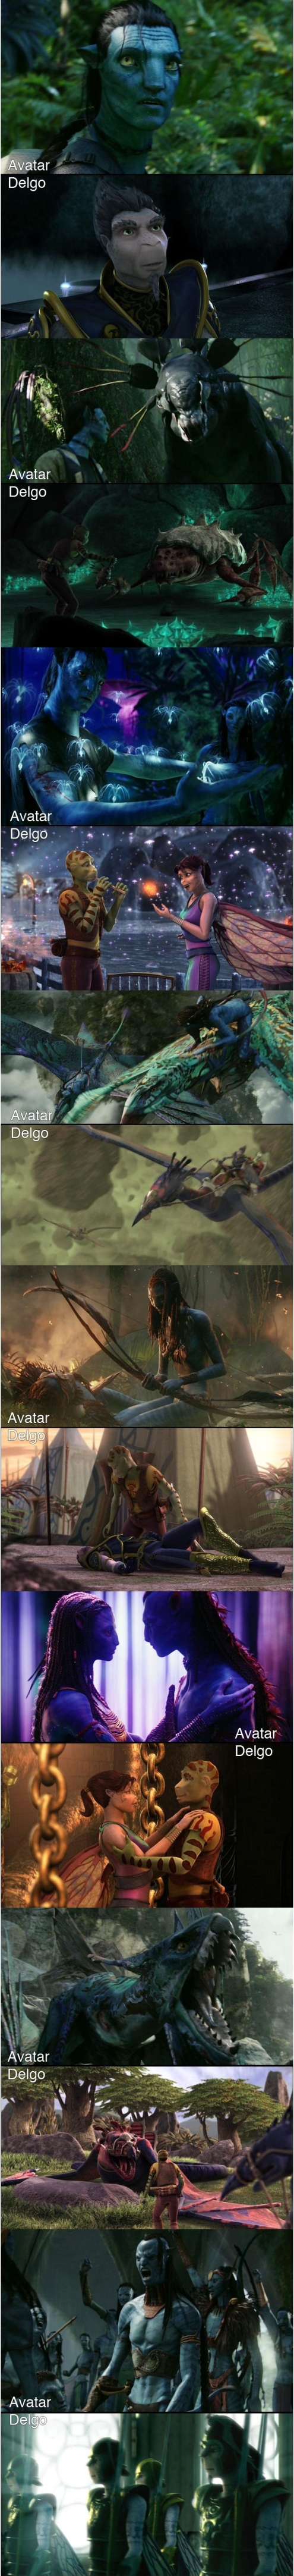 Avatar vs Delgo 2